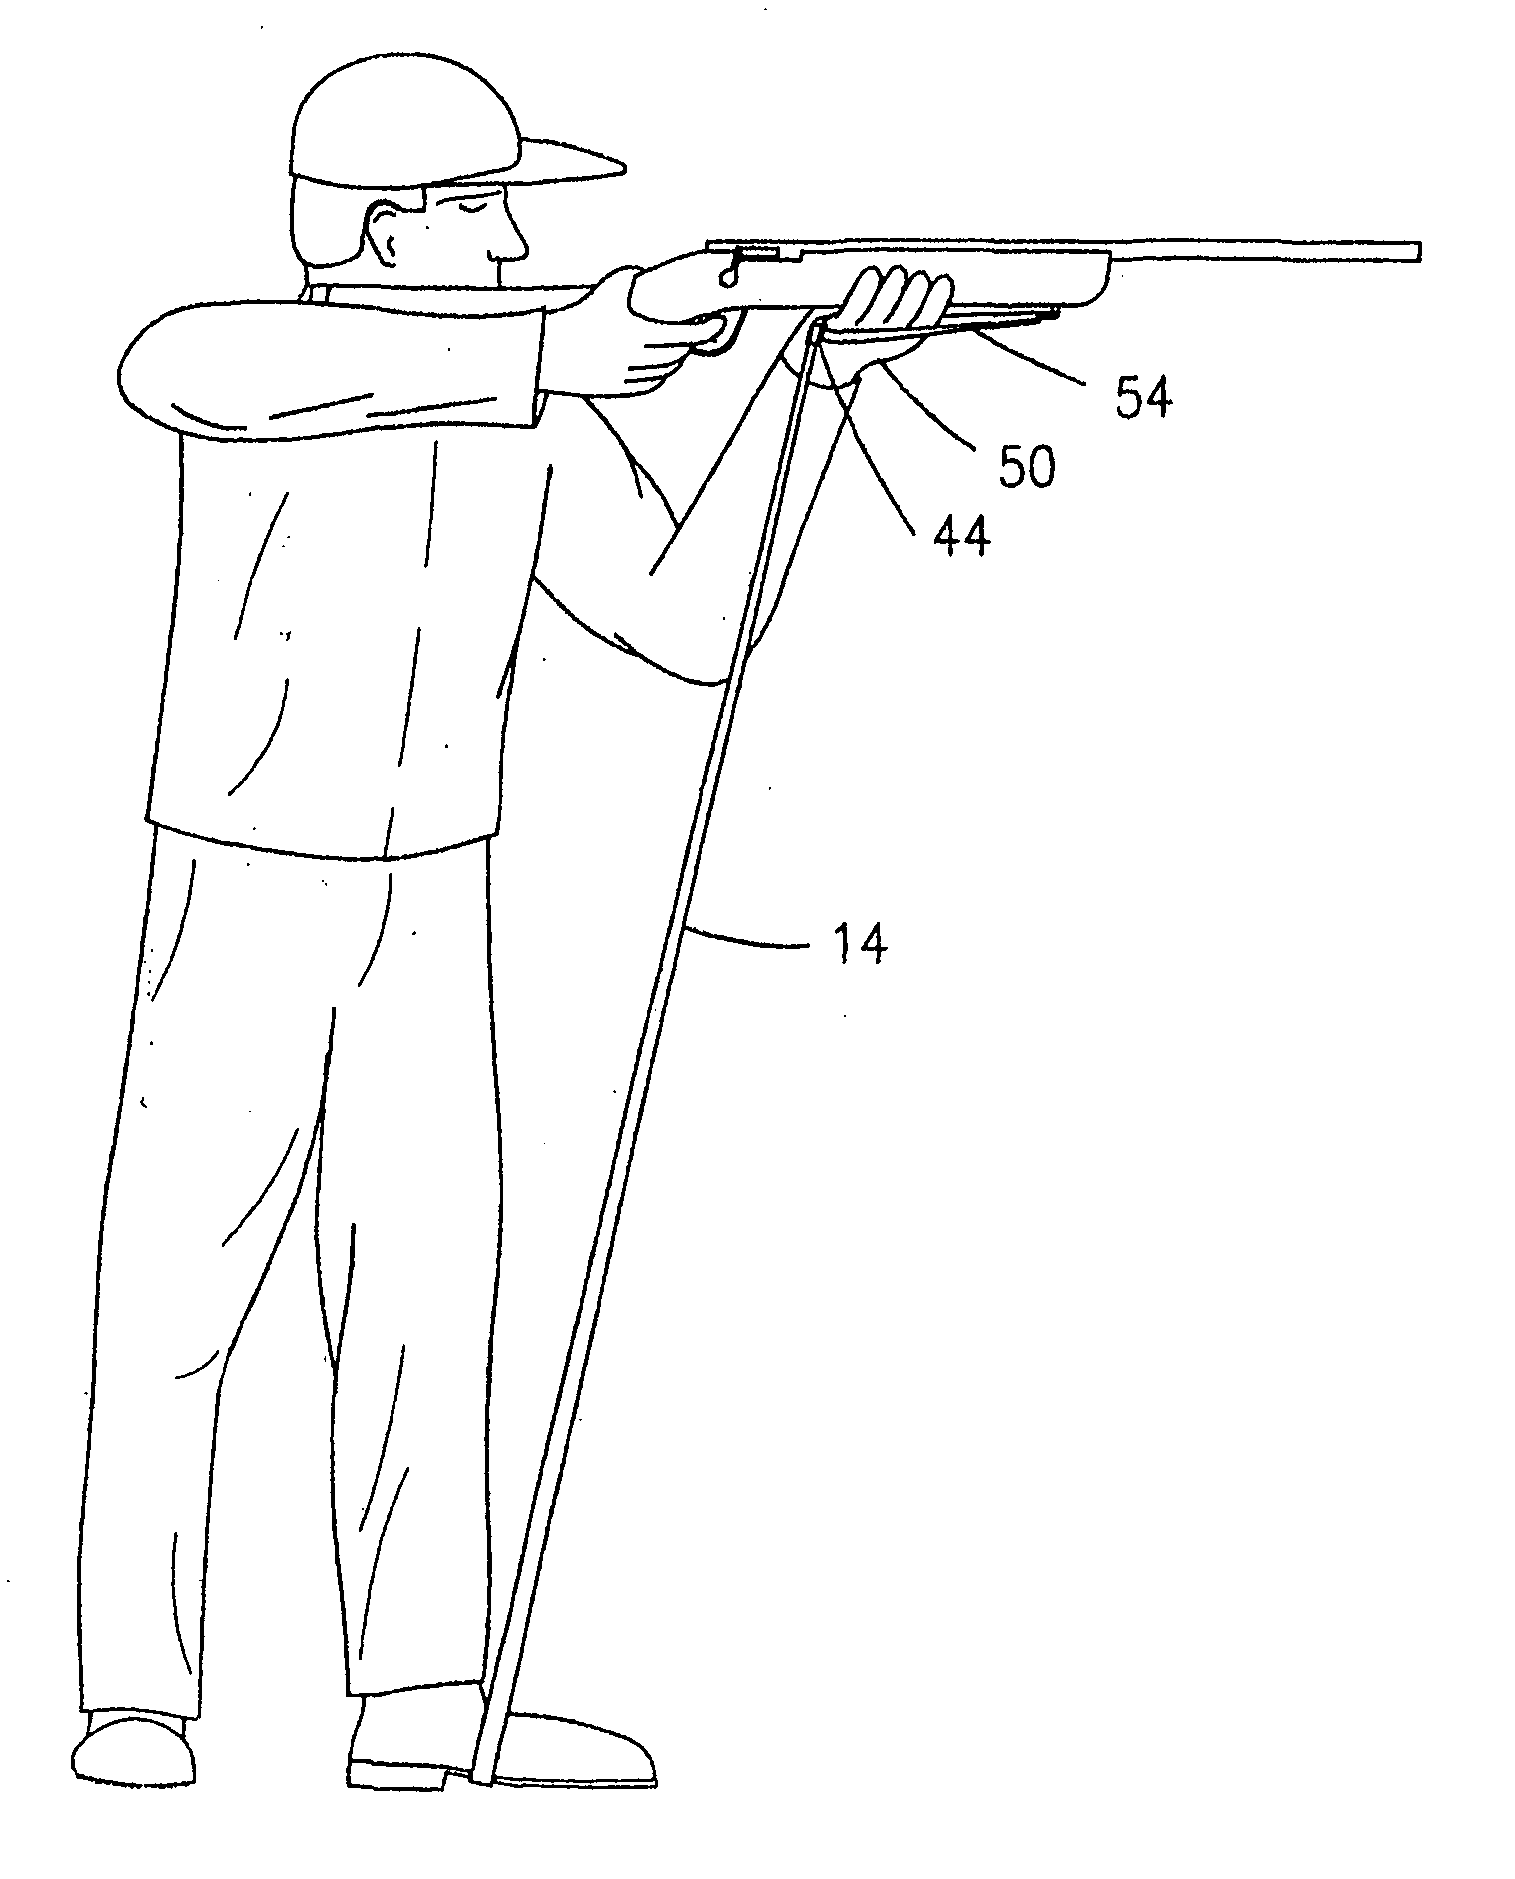 Rifile/gun steady shot sling and method of use of same